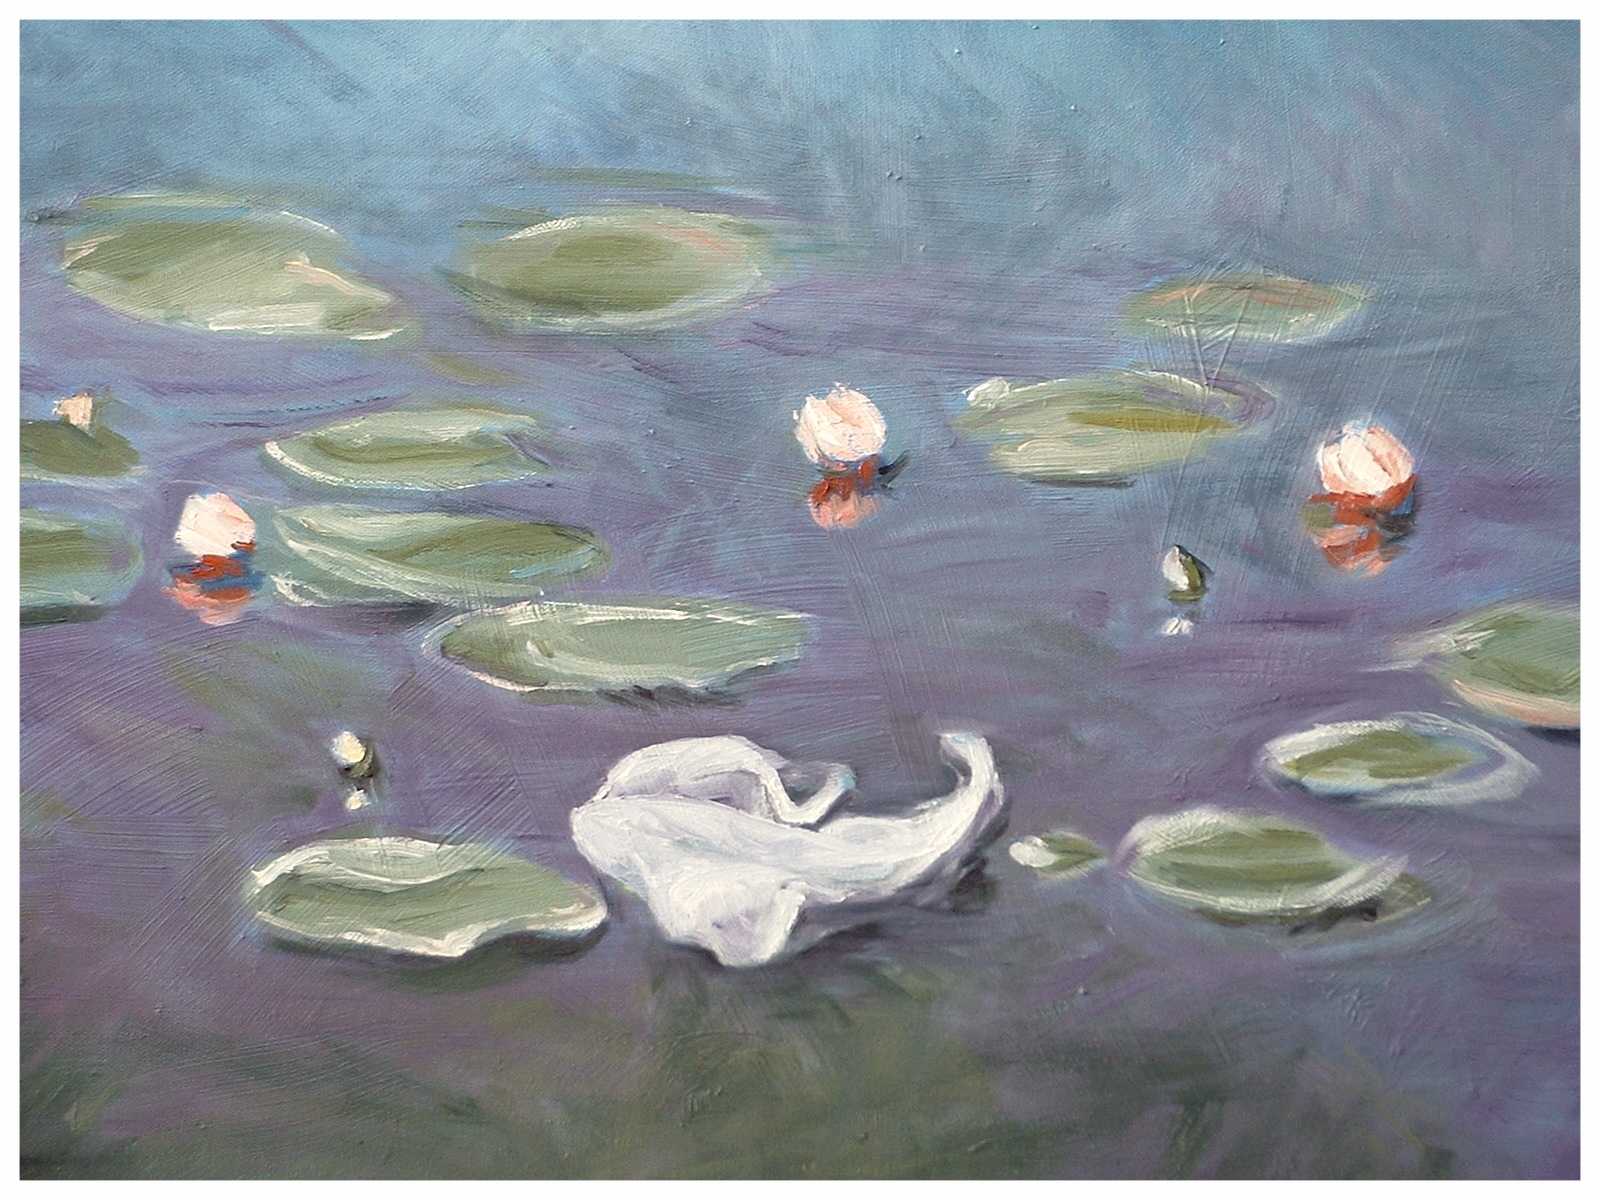 Monet's Bag (detail)